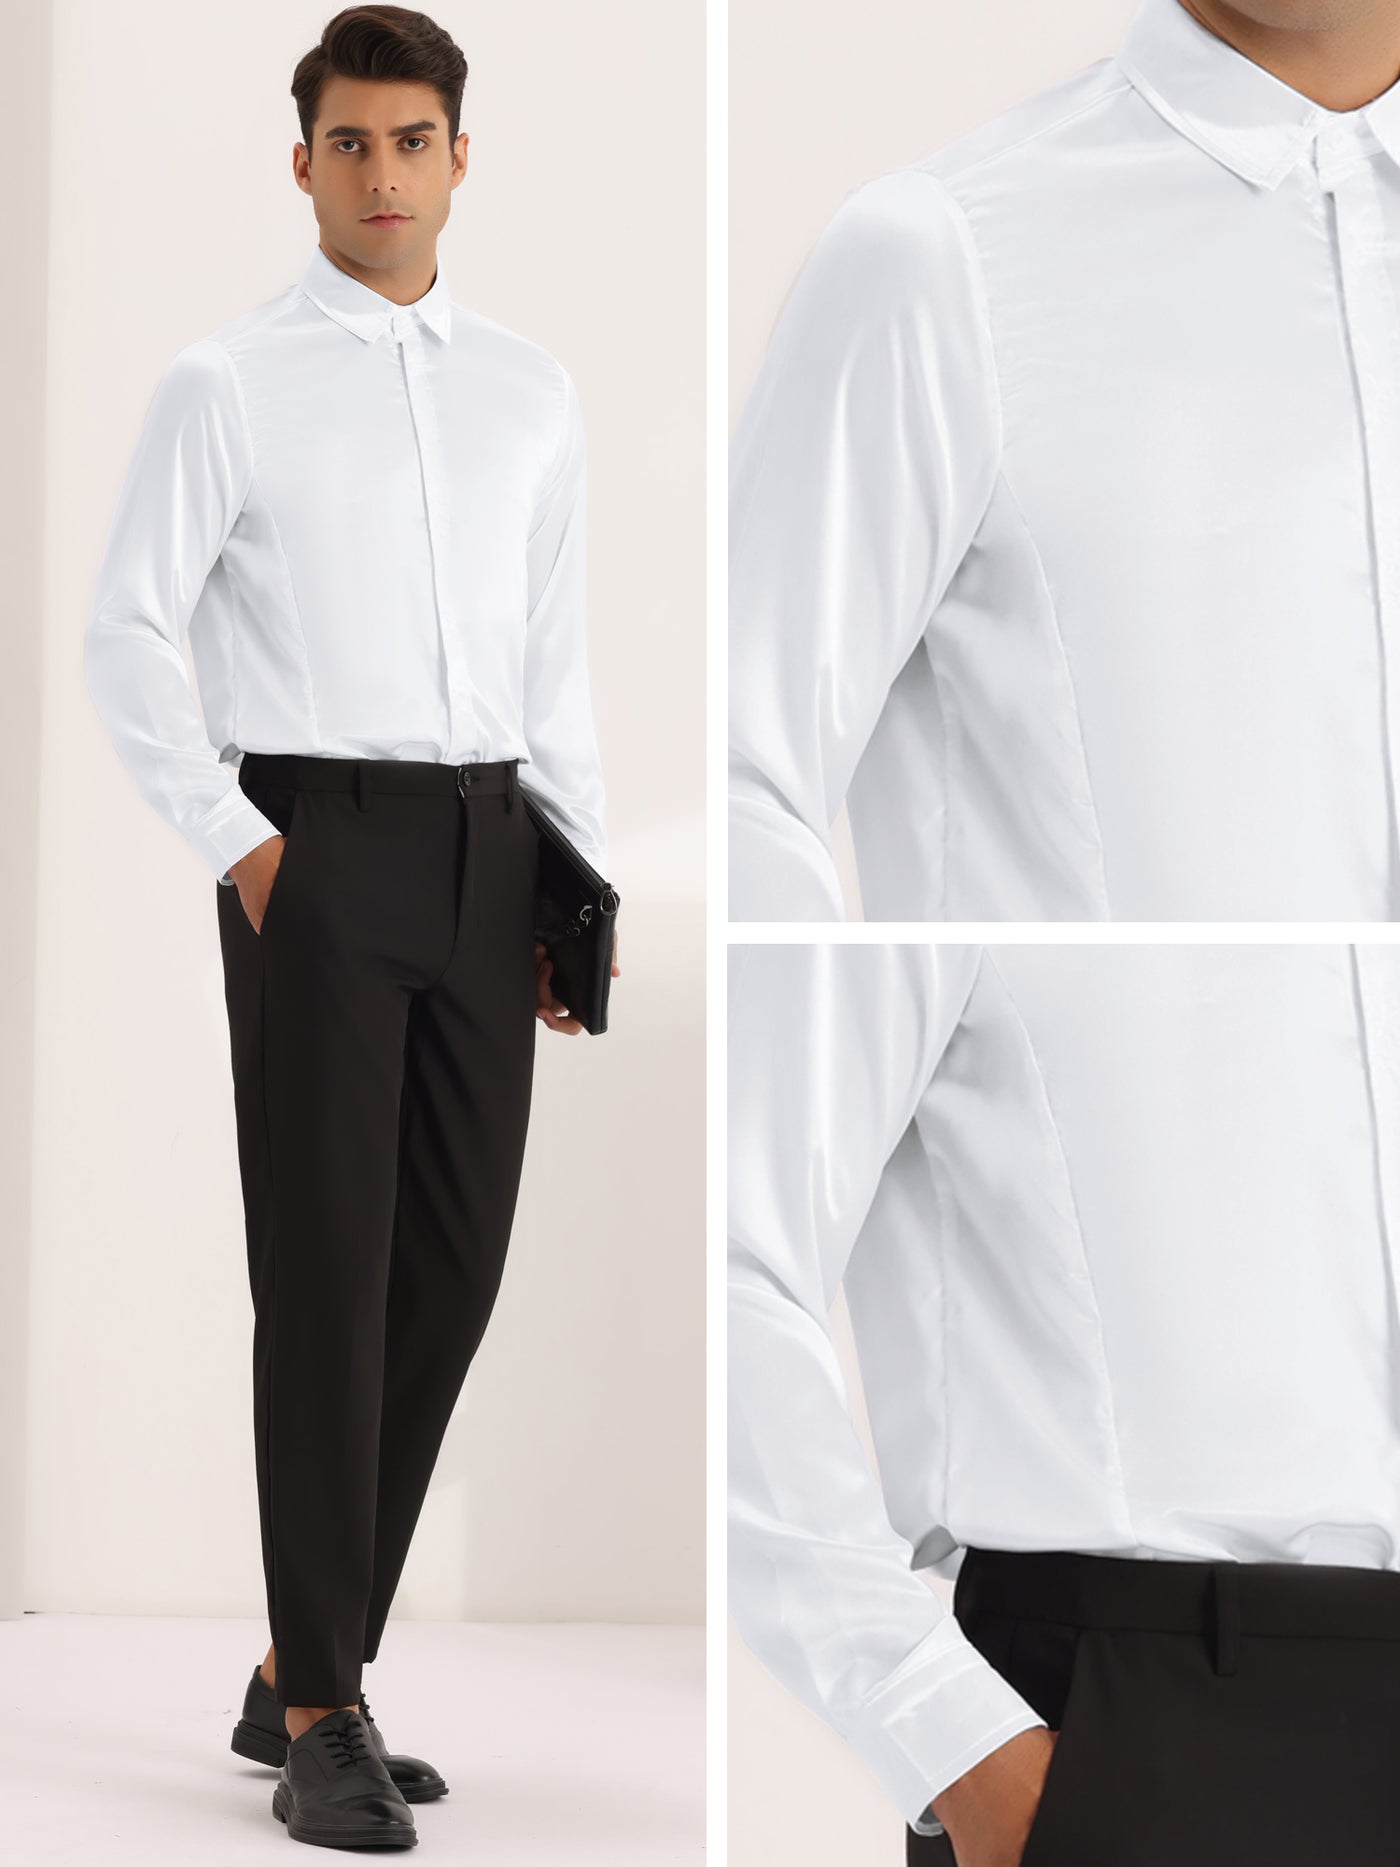 Bublédon Men's Slim Fit Long Sleeves Button Down Prom Dress Shirts